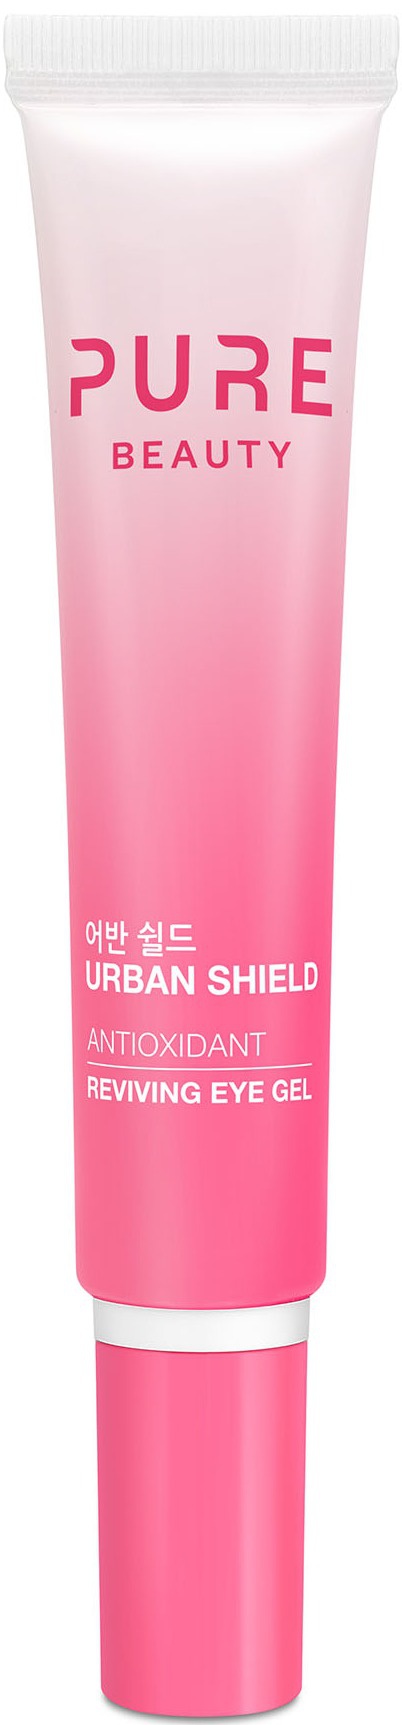 PURE BEAUTY Urban Shield Antioxidant Reviving Eye Gel Cream